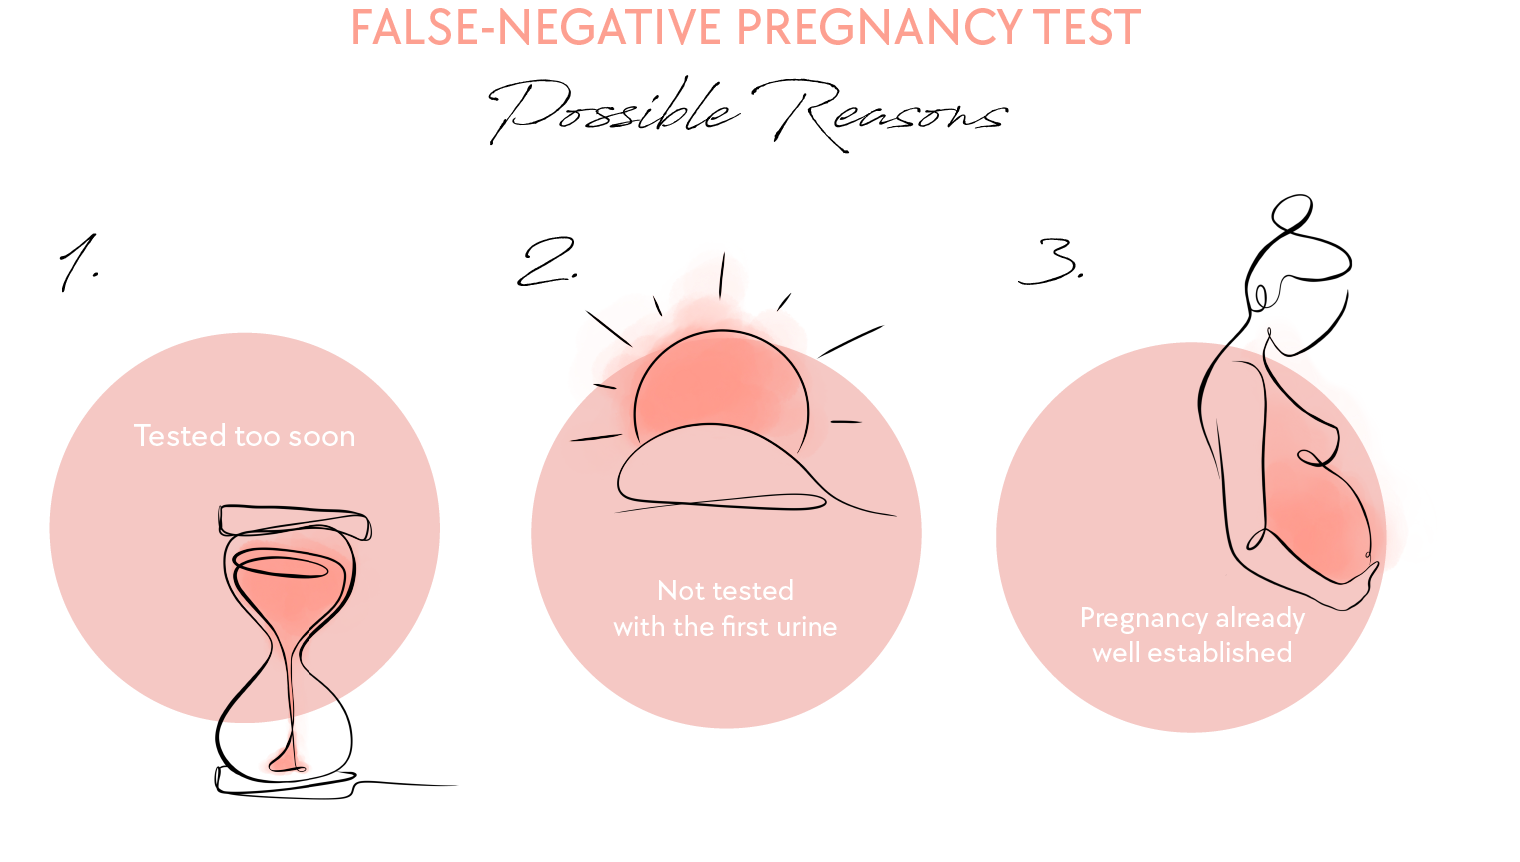 False-negative pregnancy test - possible reasons